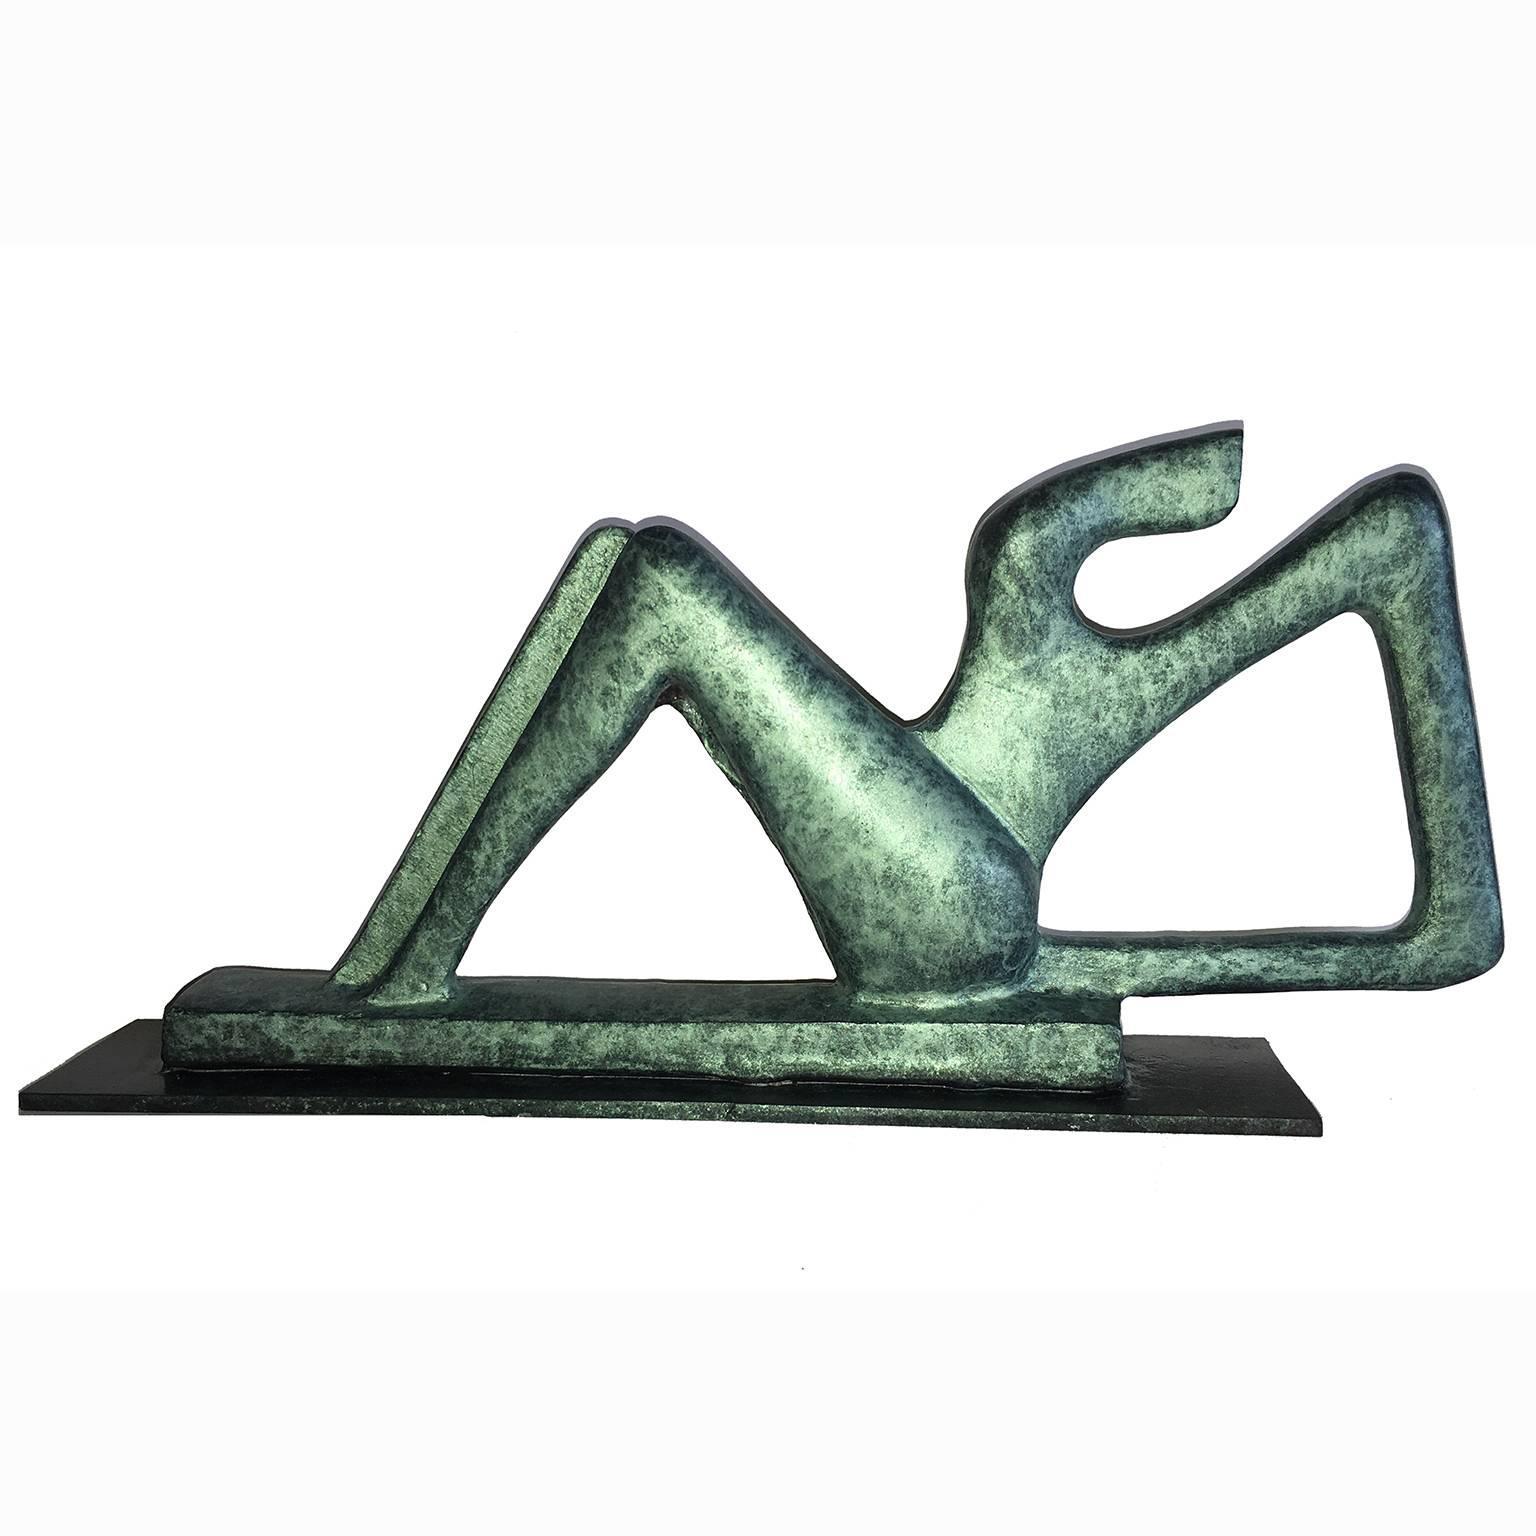 Repose figurative sculpture - Sculpture by Catherine Bohrman